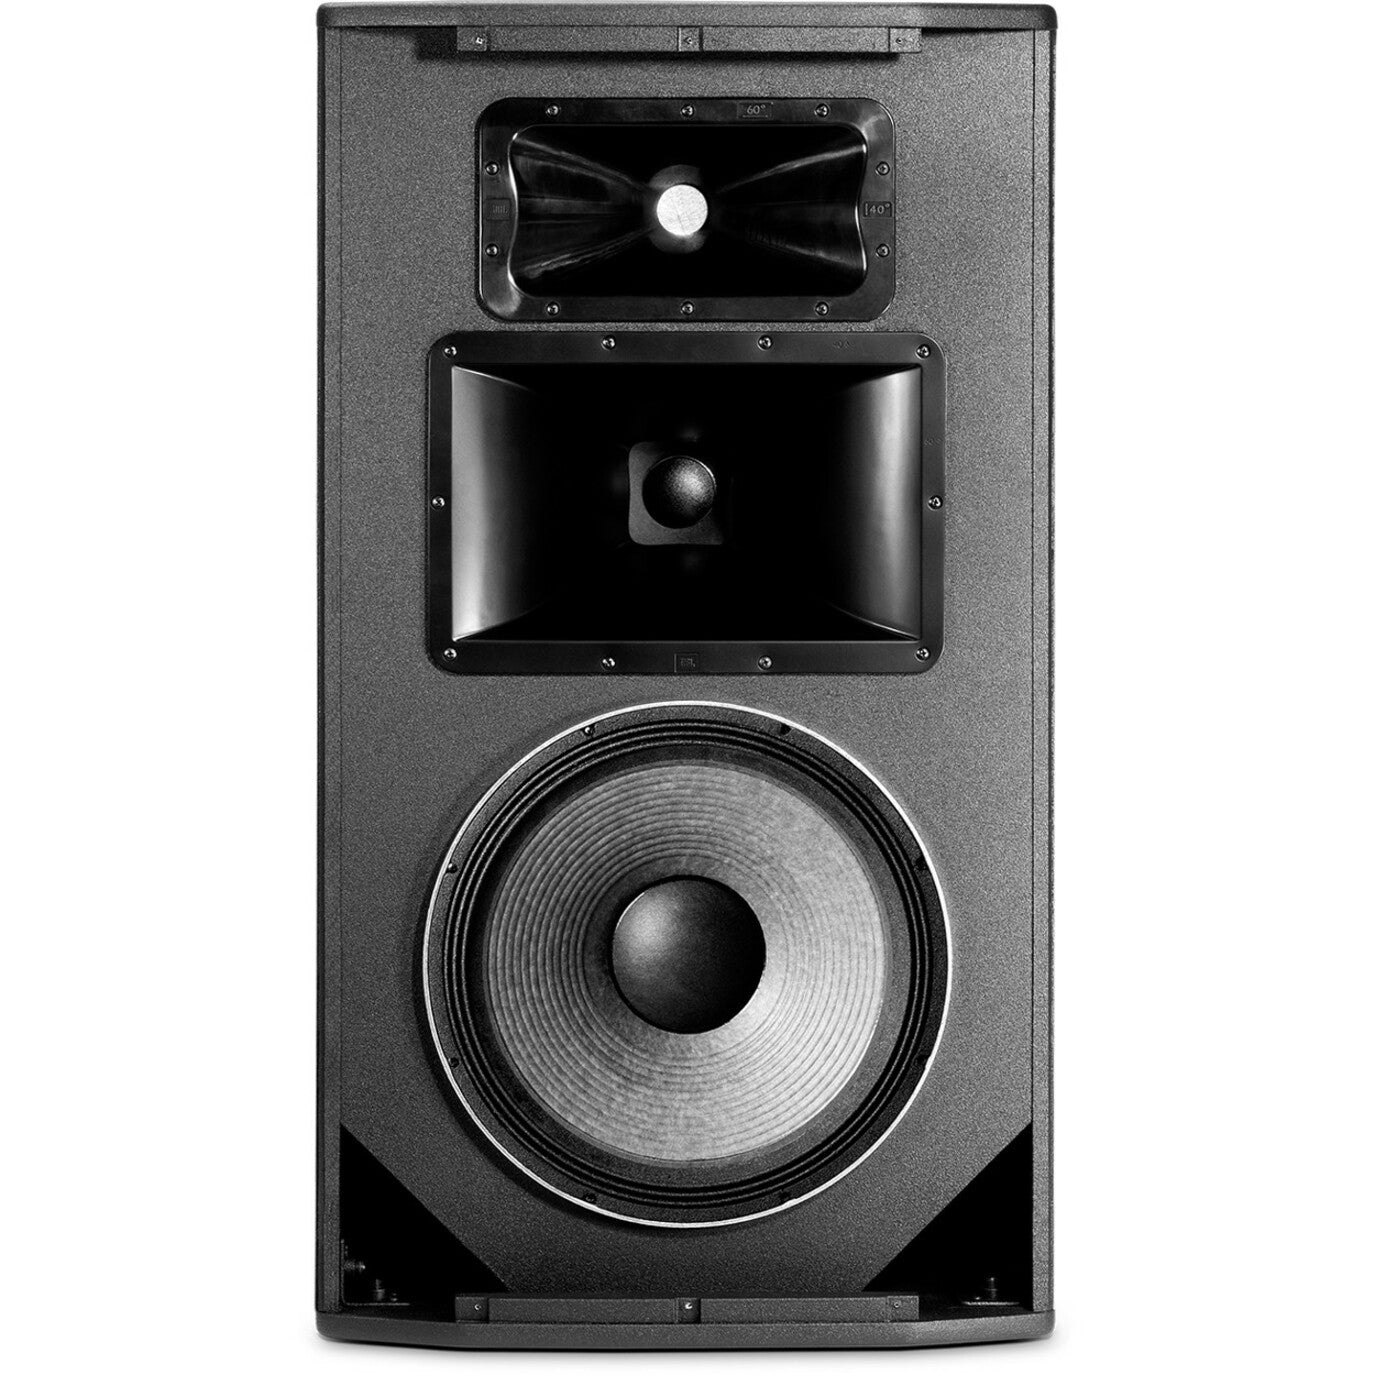 JBL Professional SRX835 Speaker System - 800W RMS, Built-in Subwoofer, Rugged Design, Bass Reflex